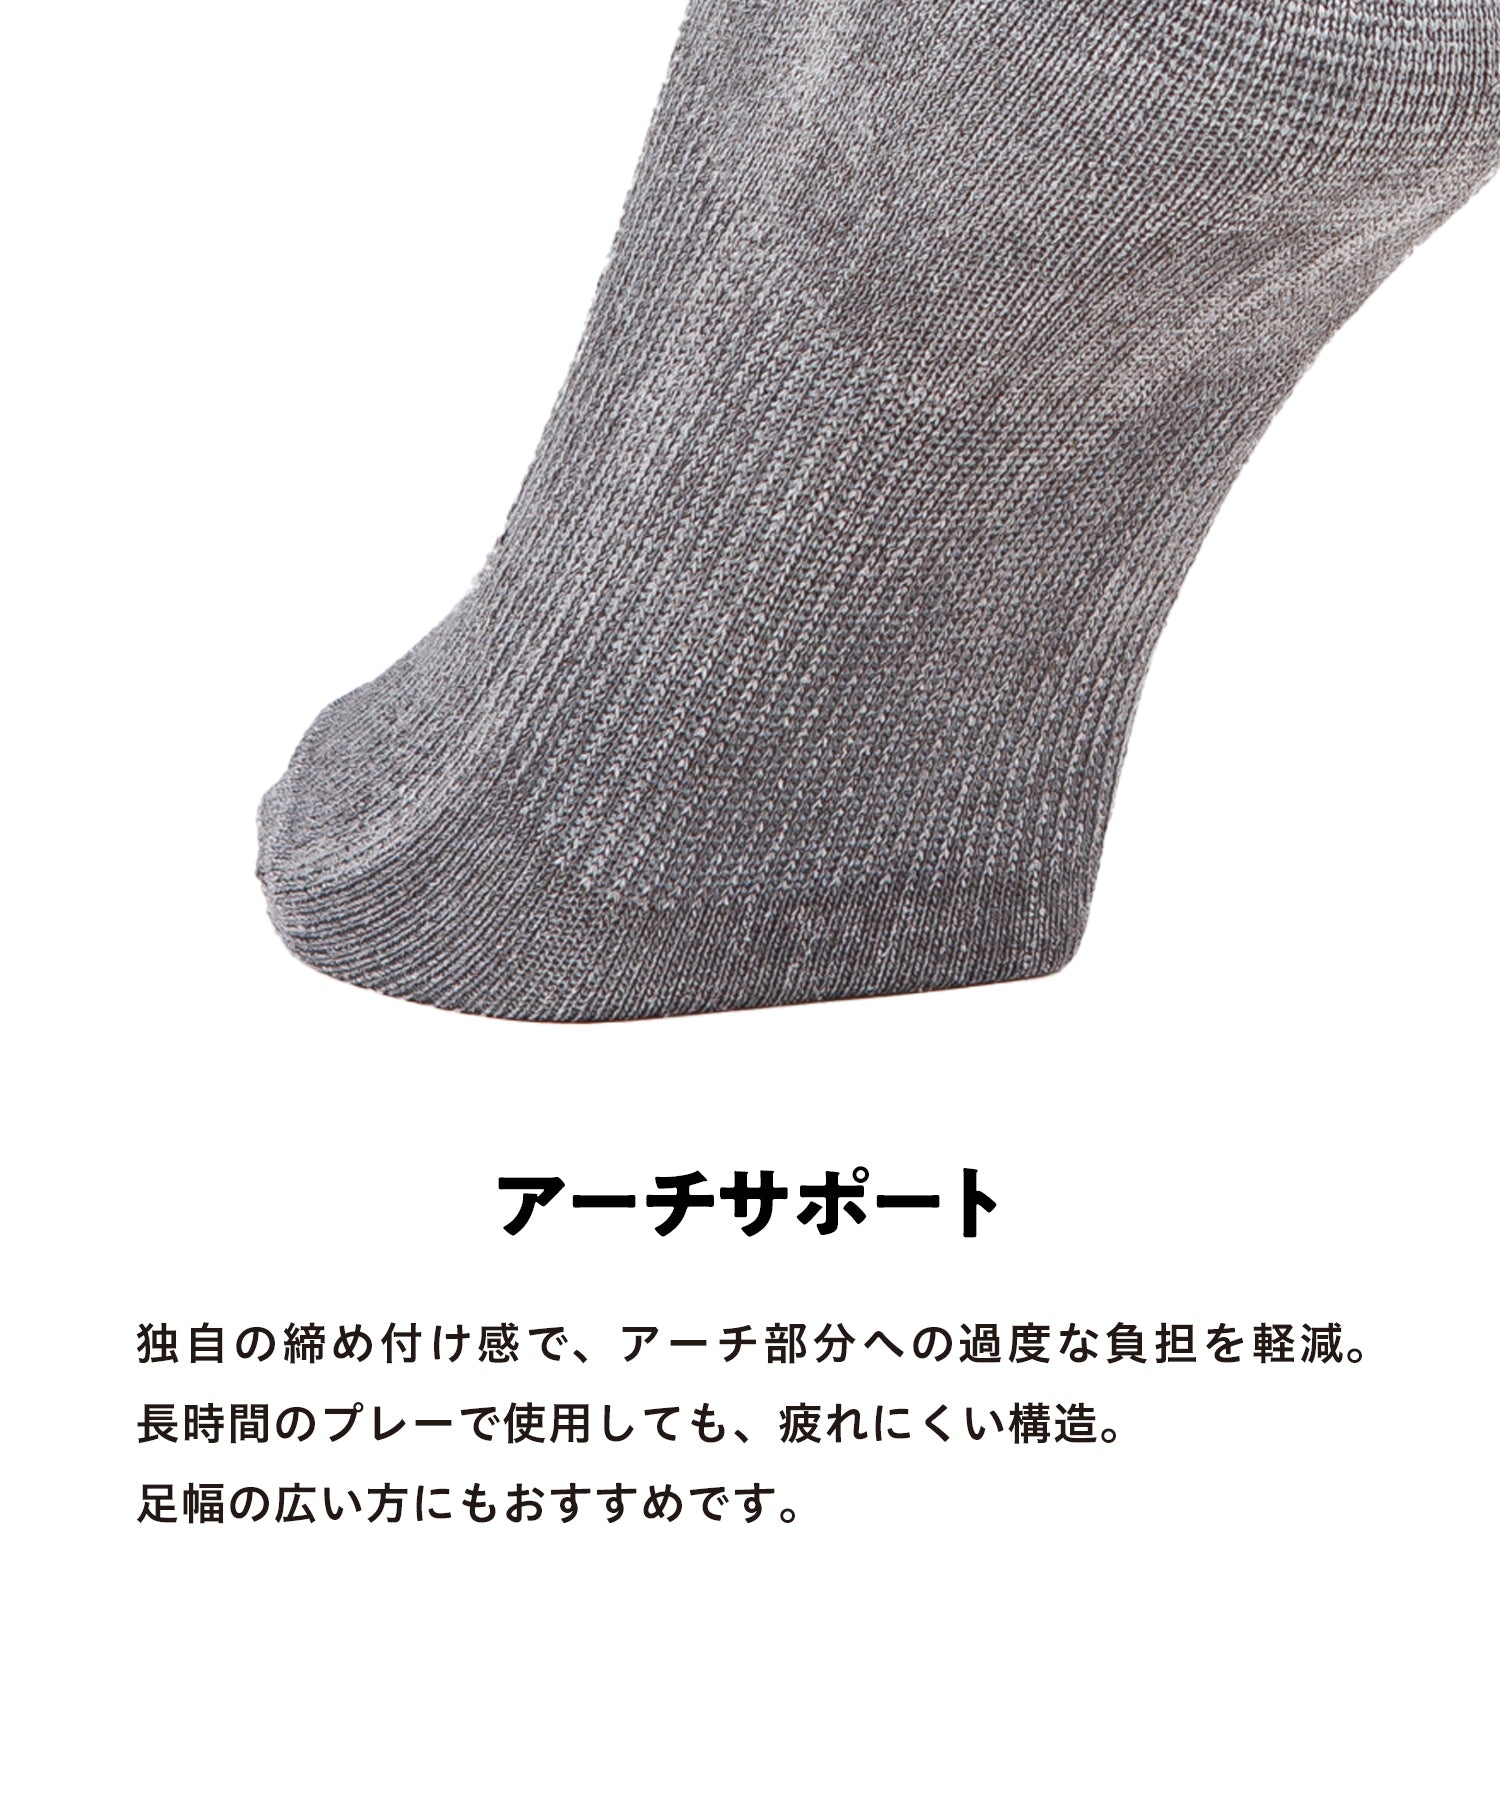 nanobyte socks short